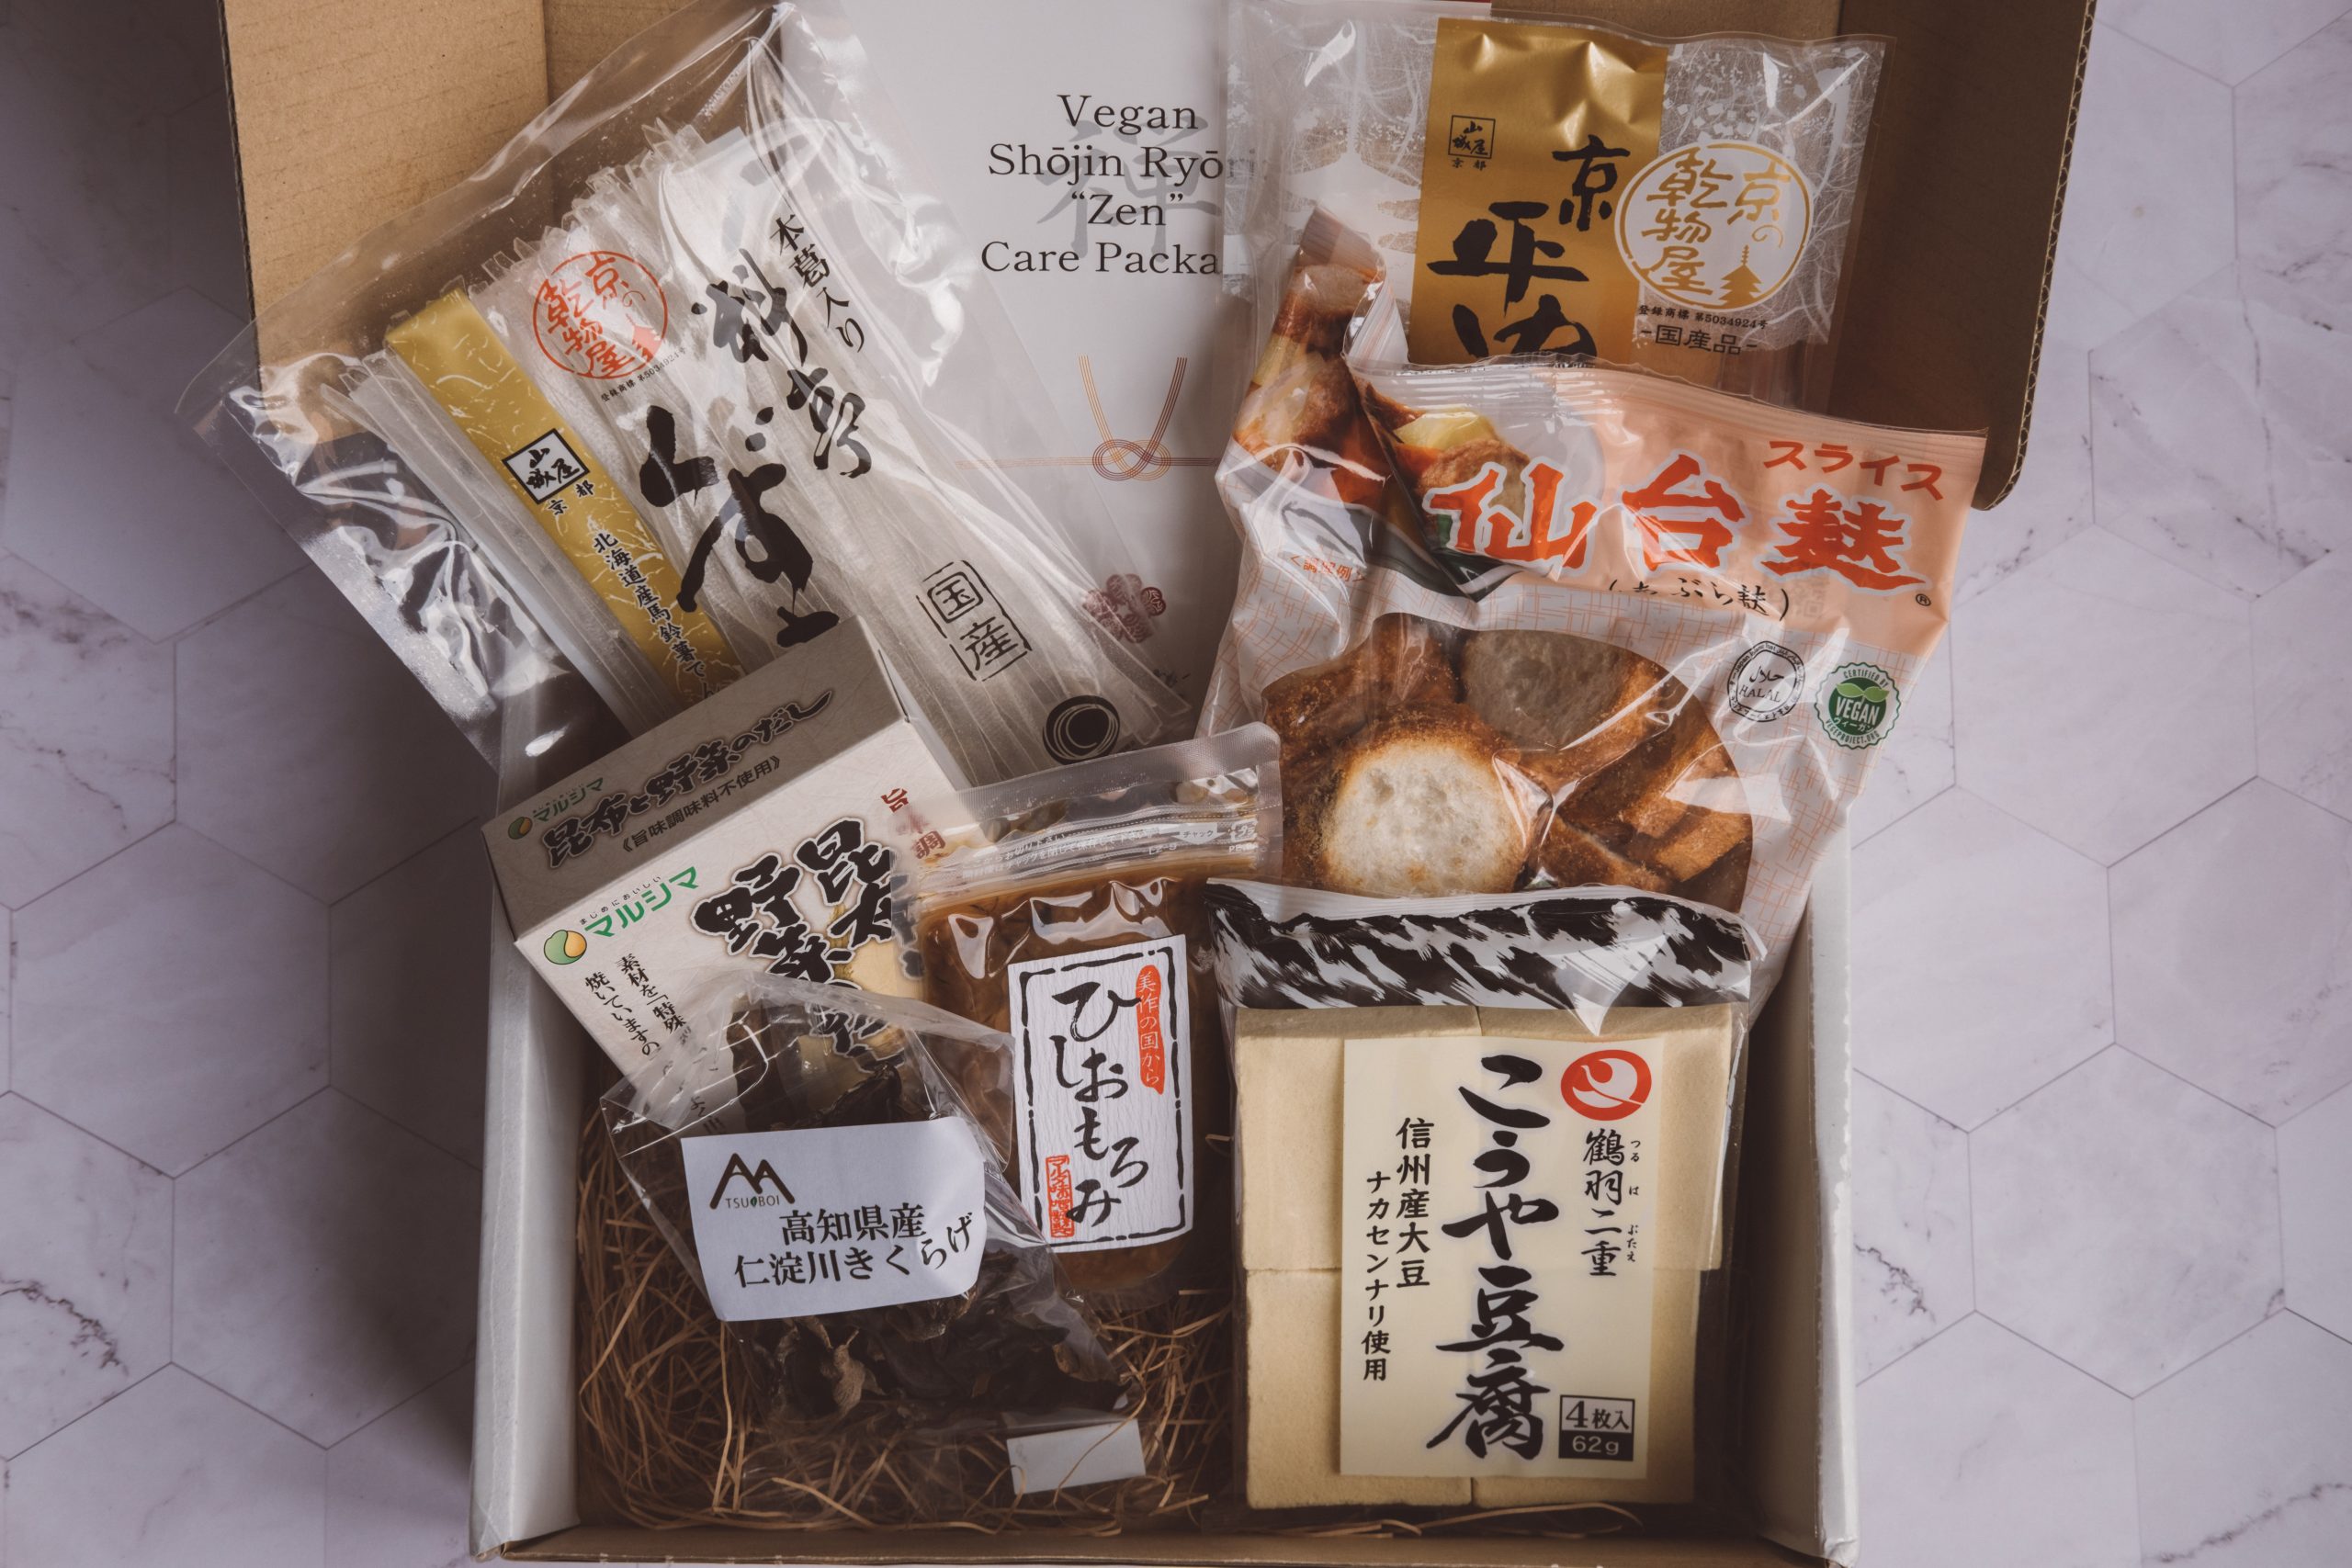 Ingredients inside the Kokoro care package - Vegan Zen pack